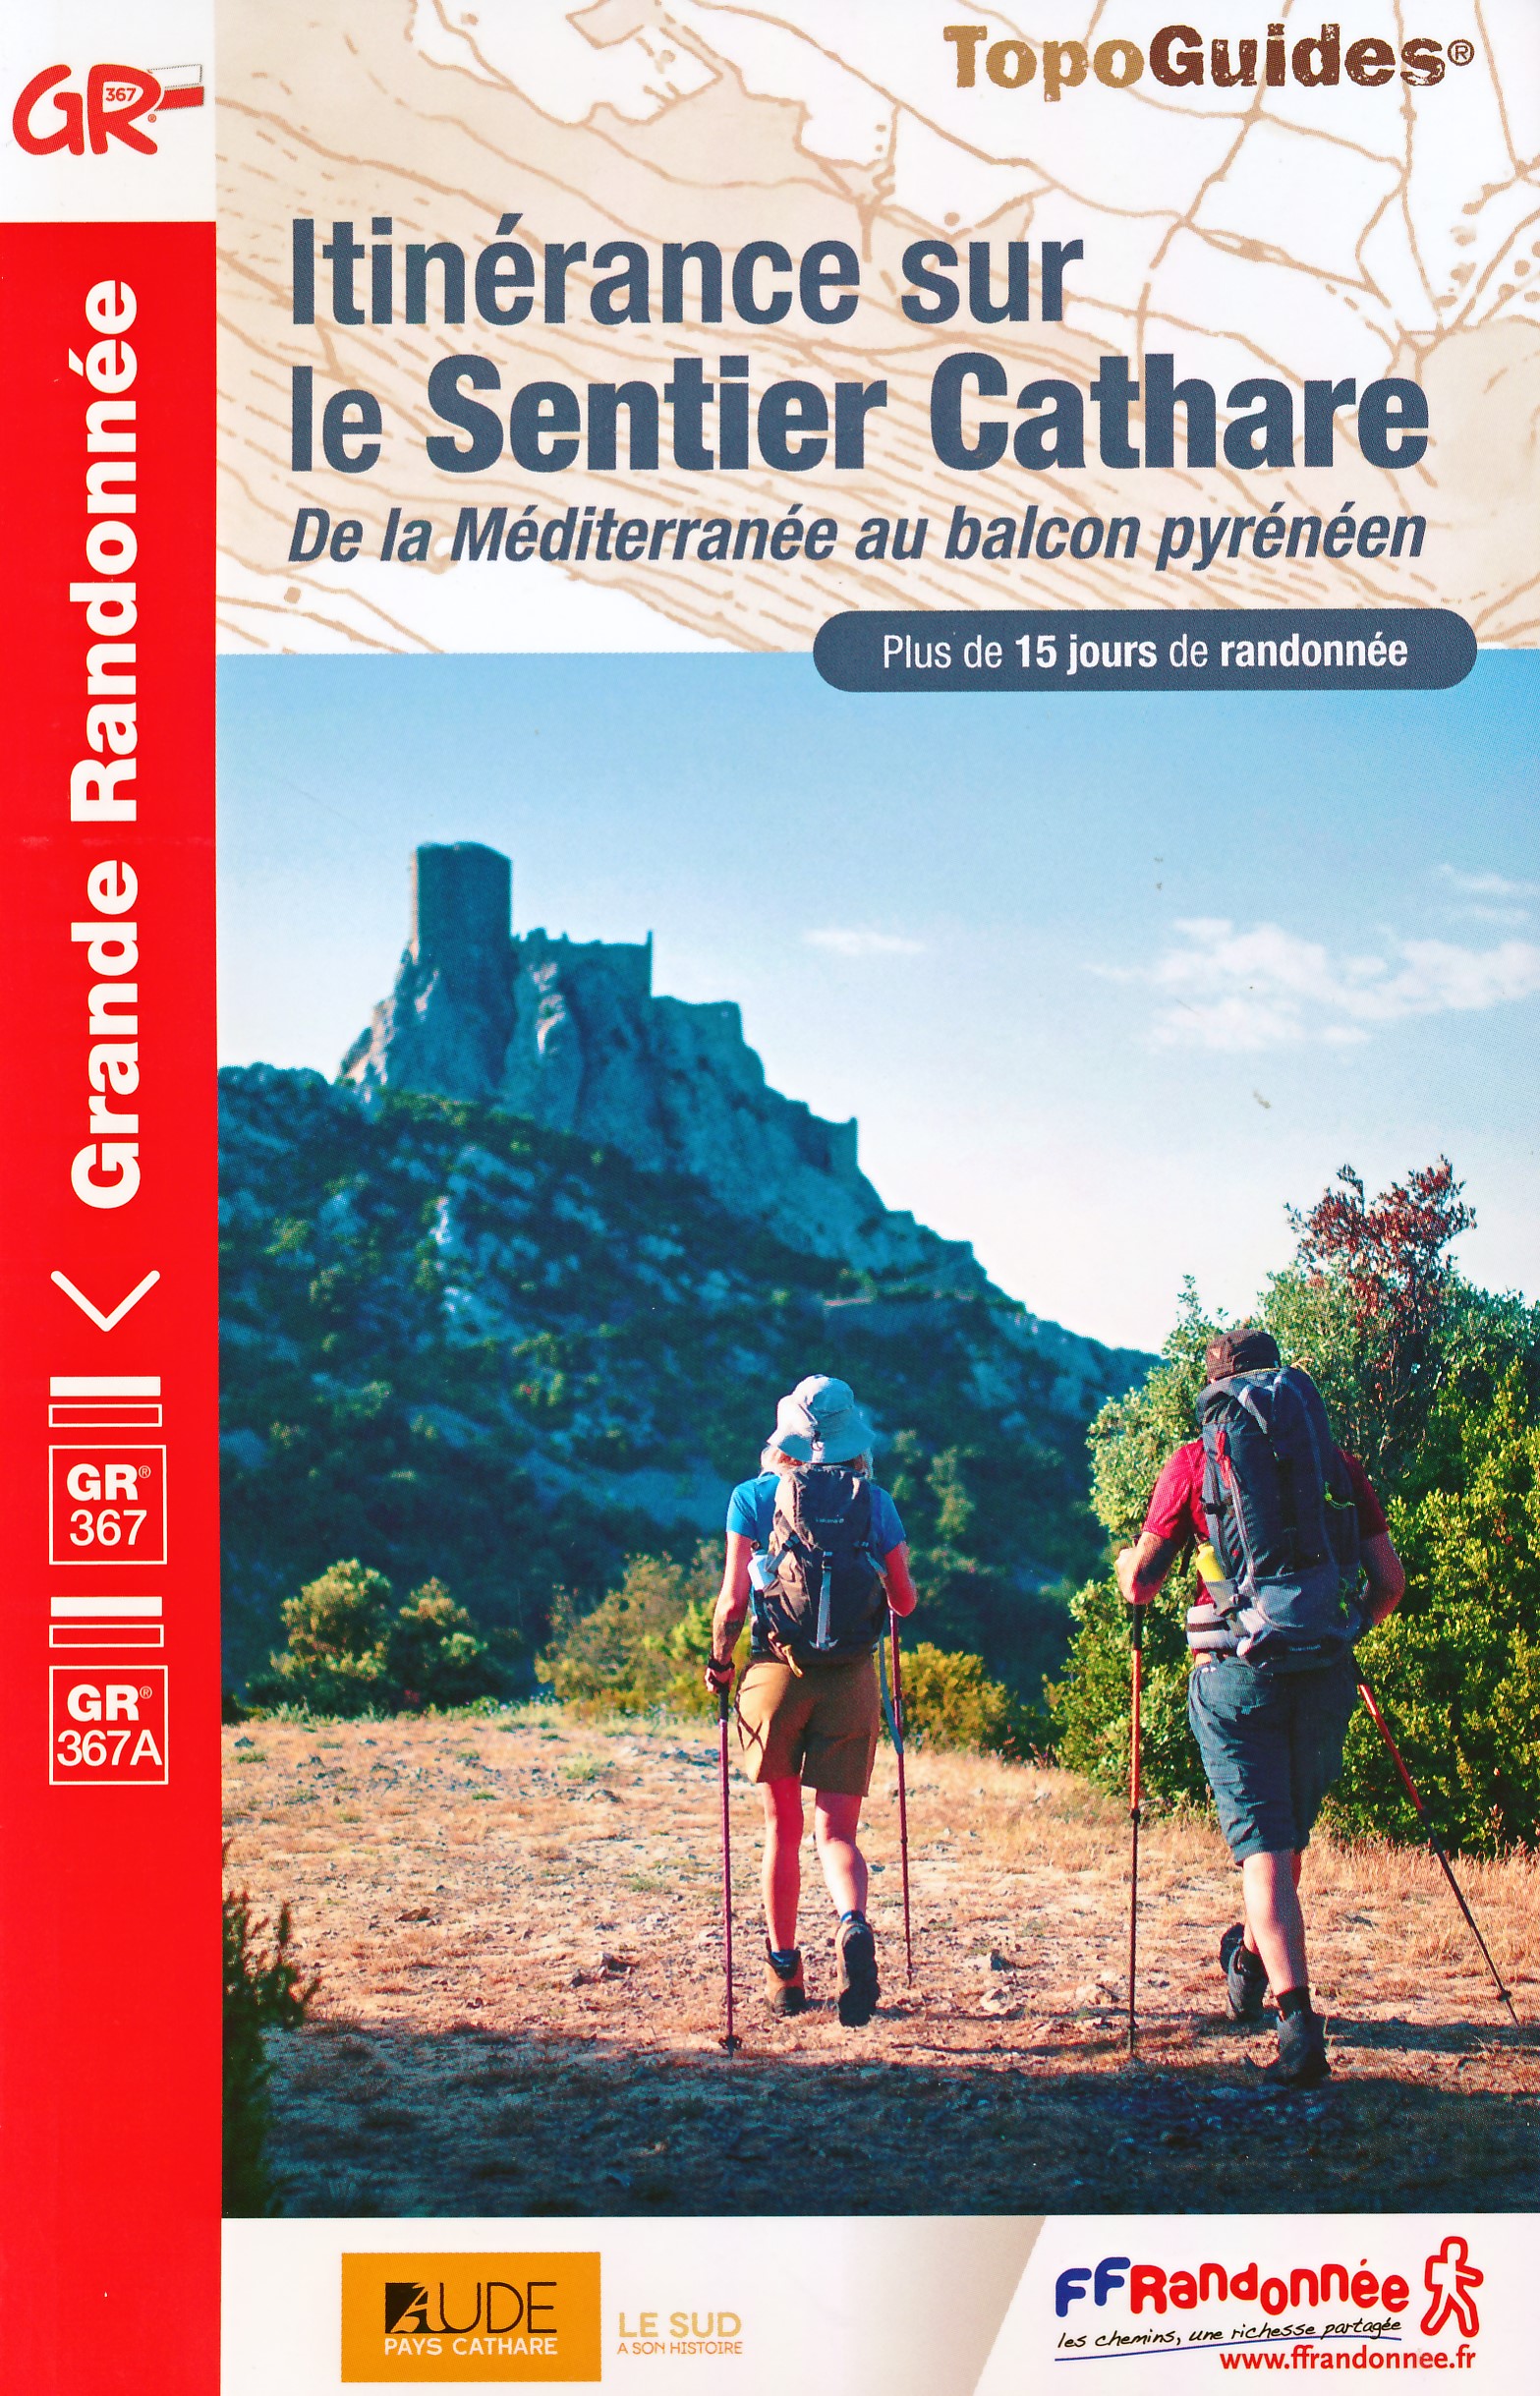 Online bestellen: Wandelgids Itinérance sur le Sentier Cathare GR367 - GR367A | FFRP